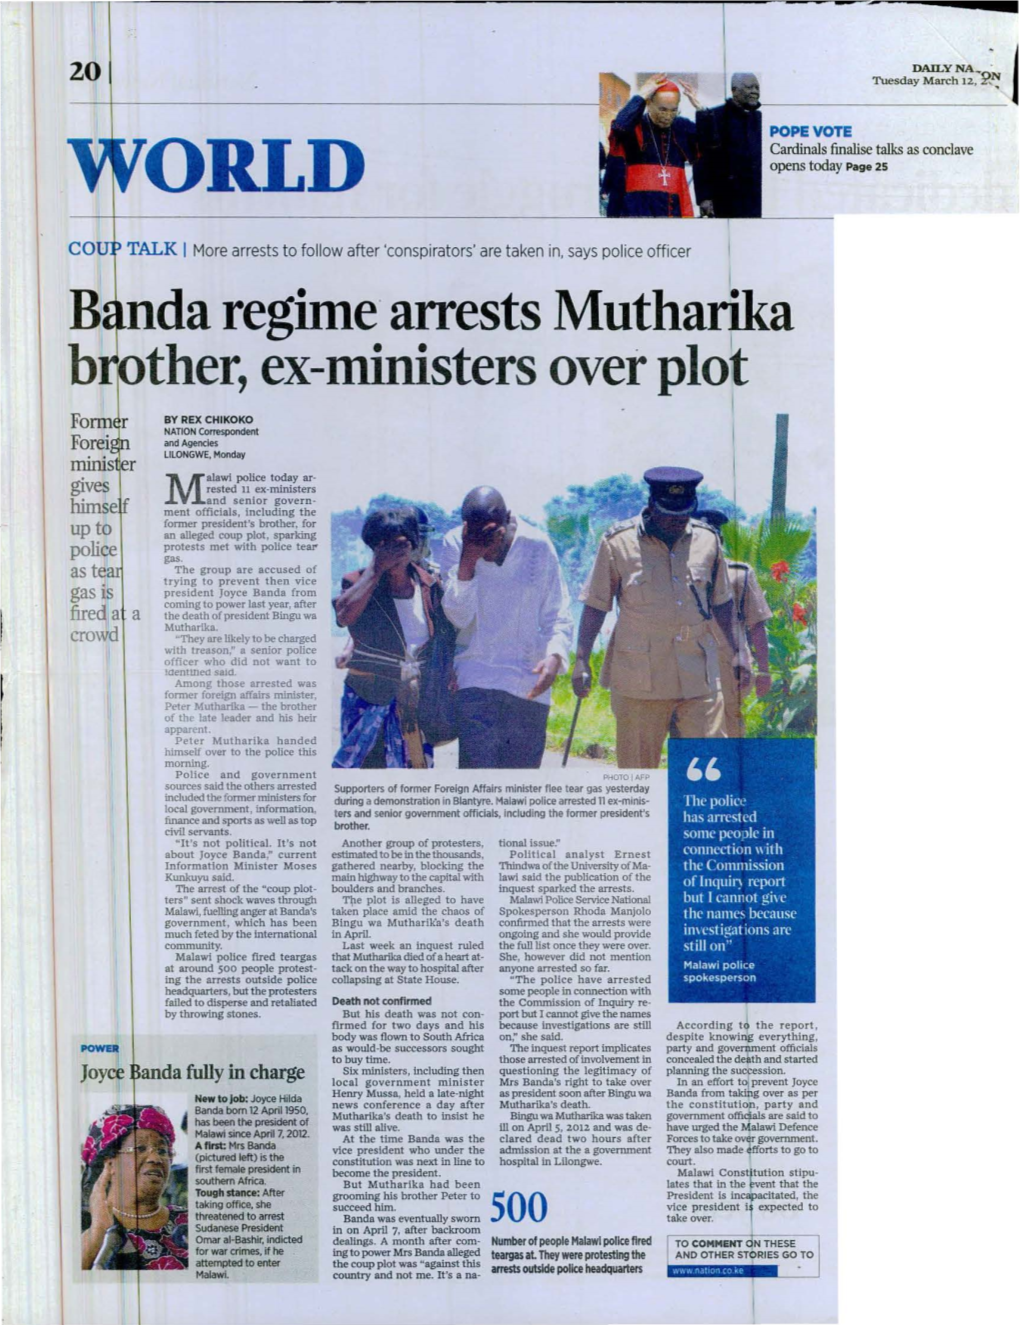 Da Reglllle Arrests Mutharika Ther, Ex-Ministers Ovet Plot